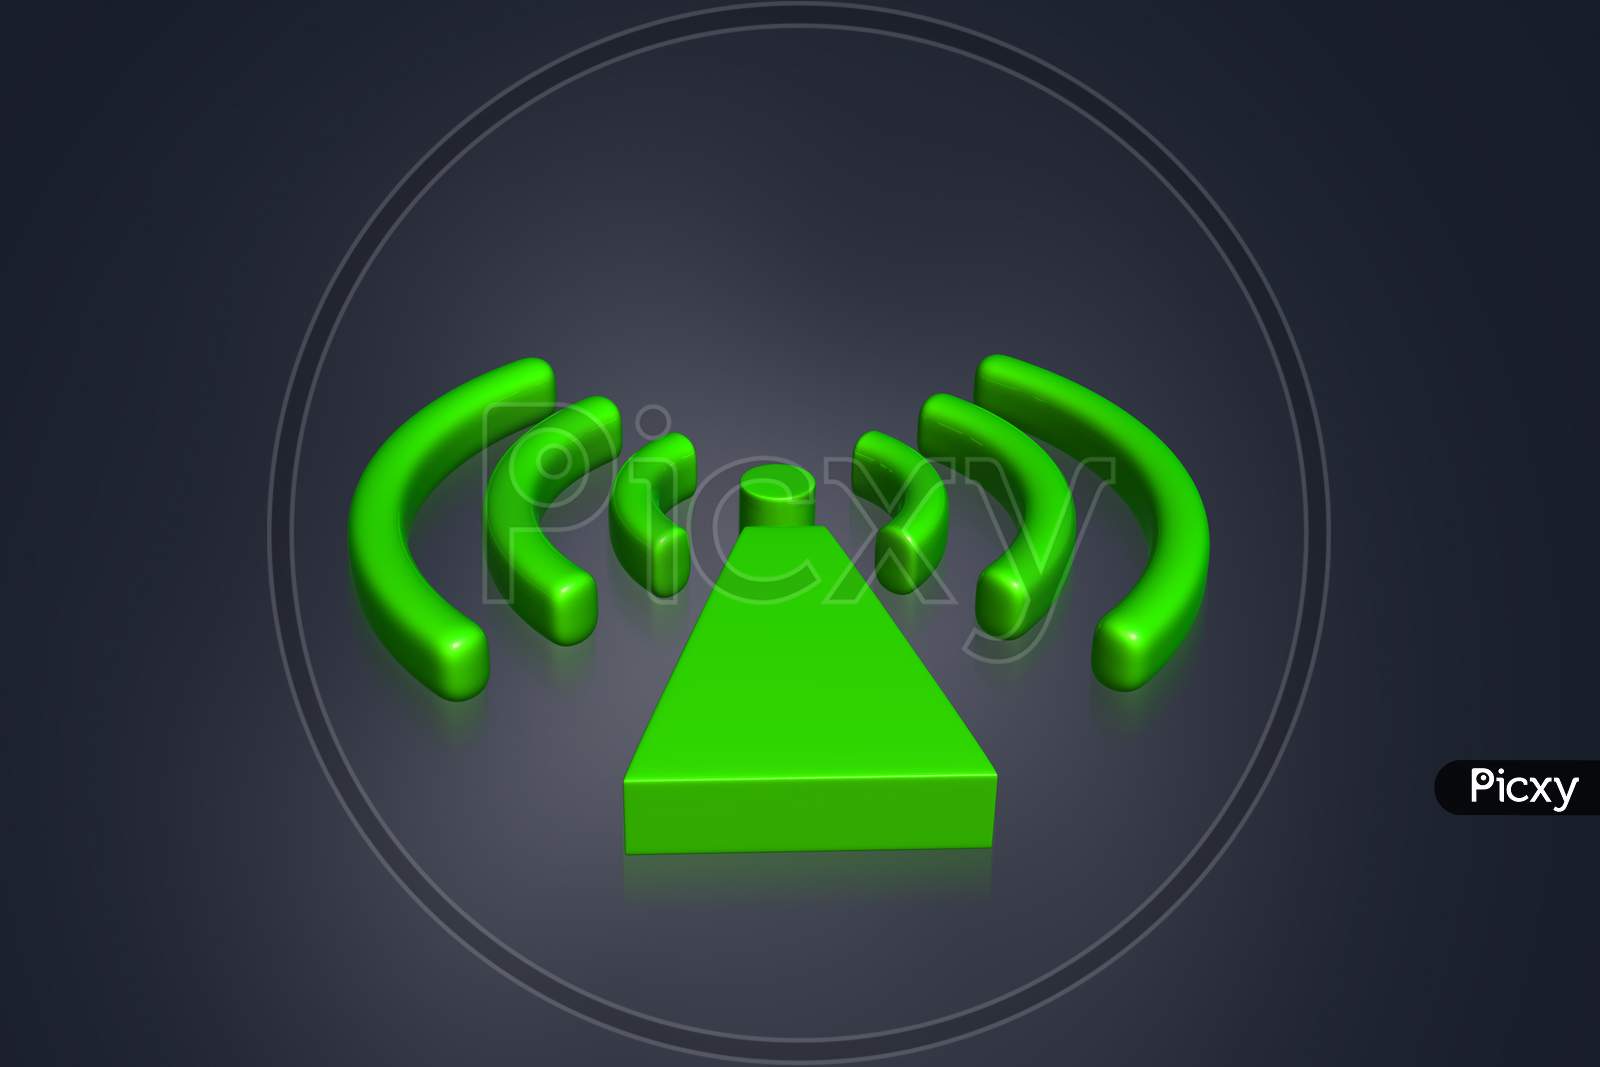 3D Multi-Use Wifi Symbol In Color Background